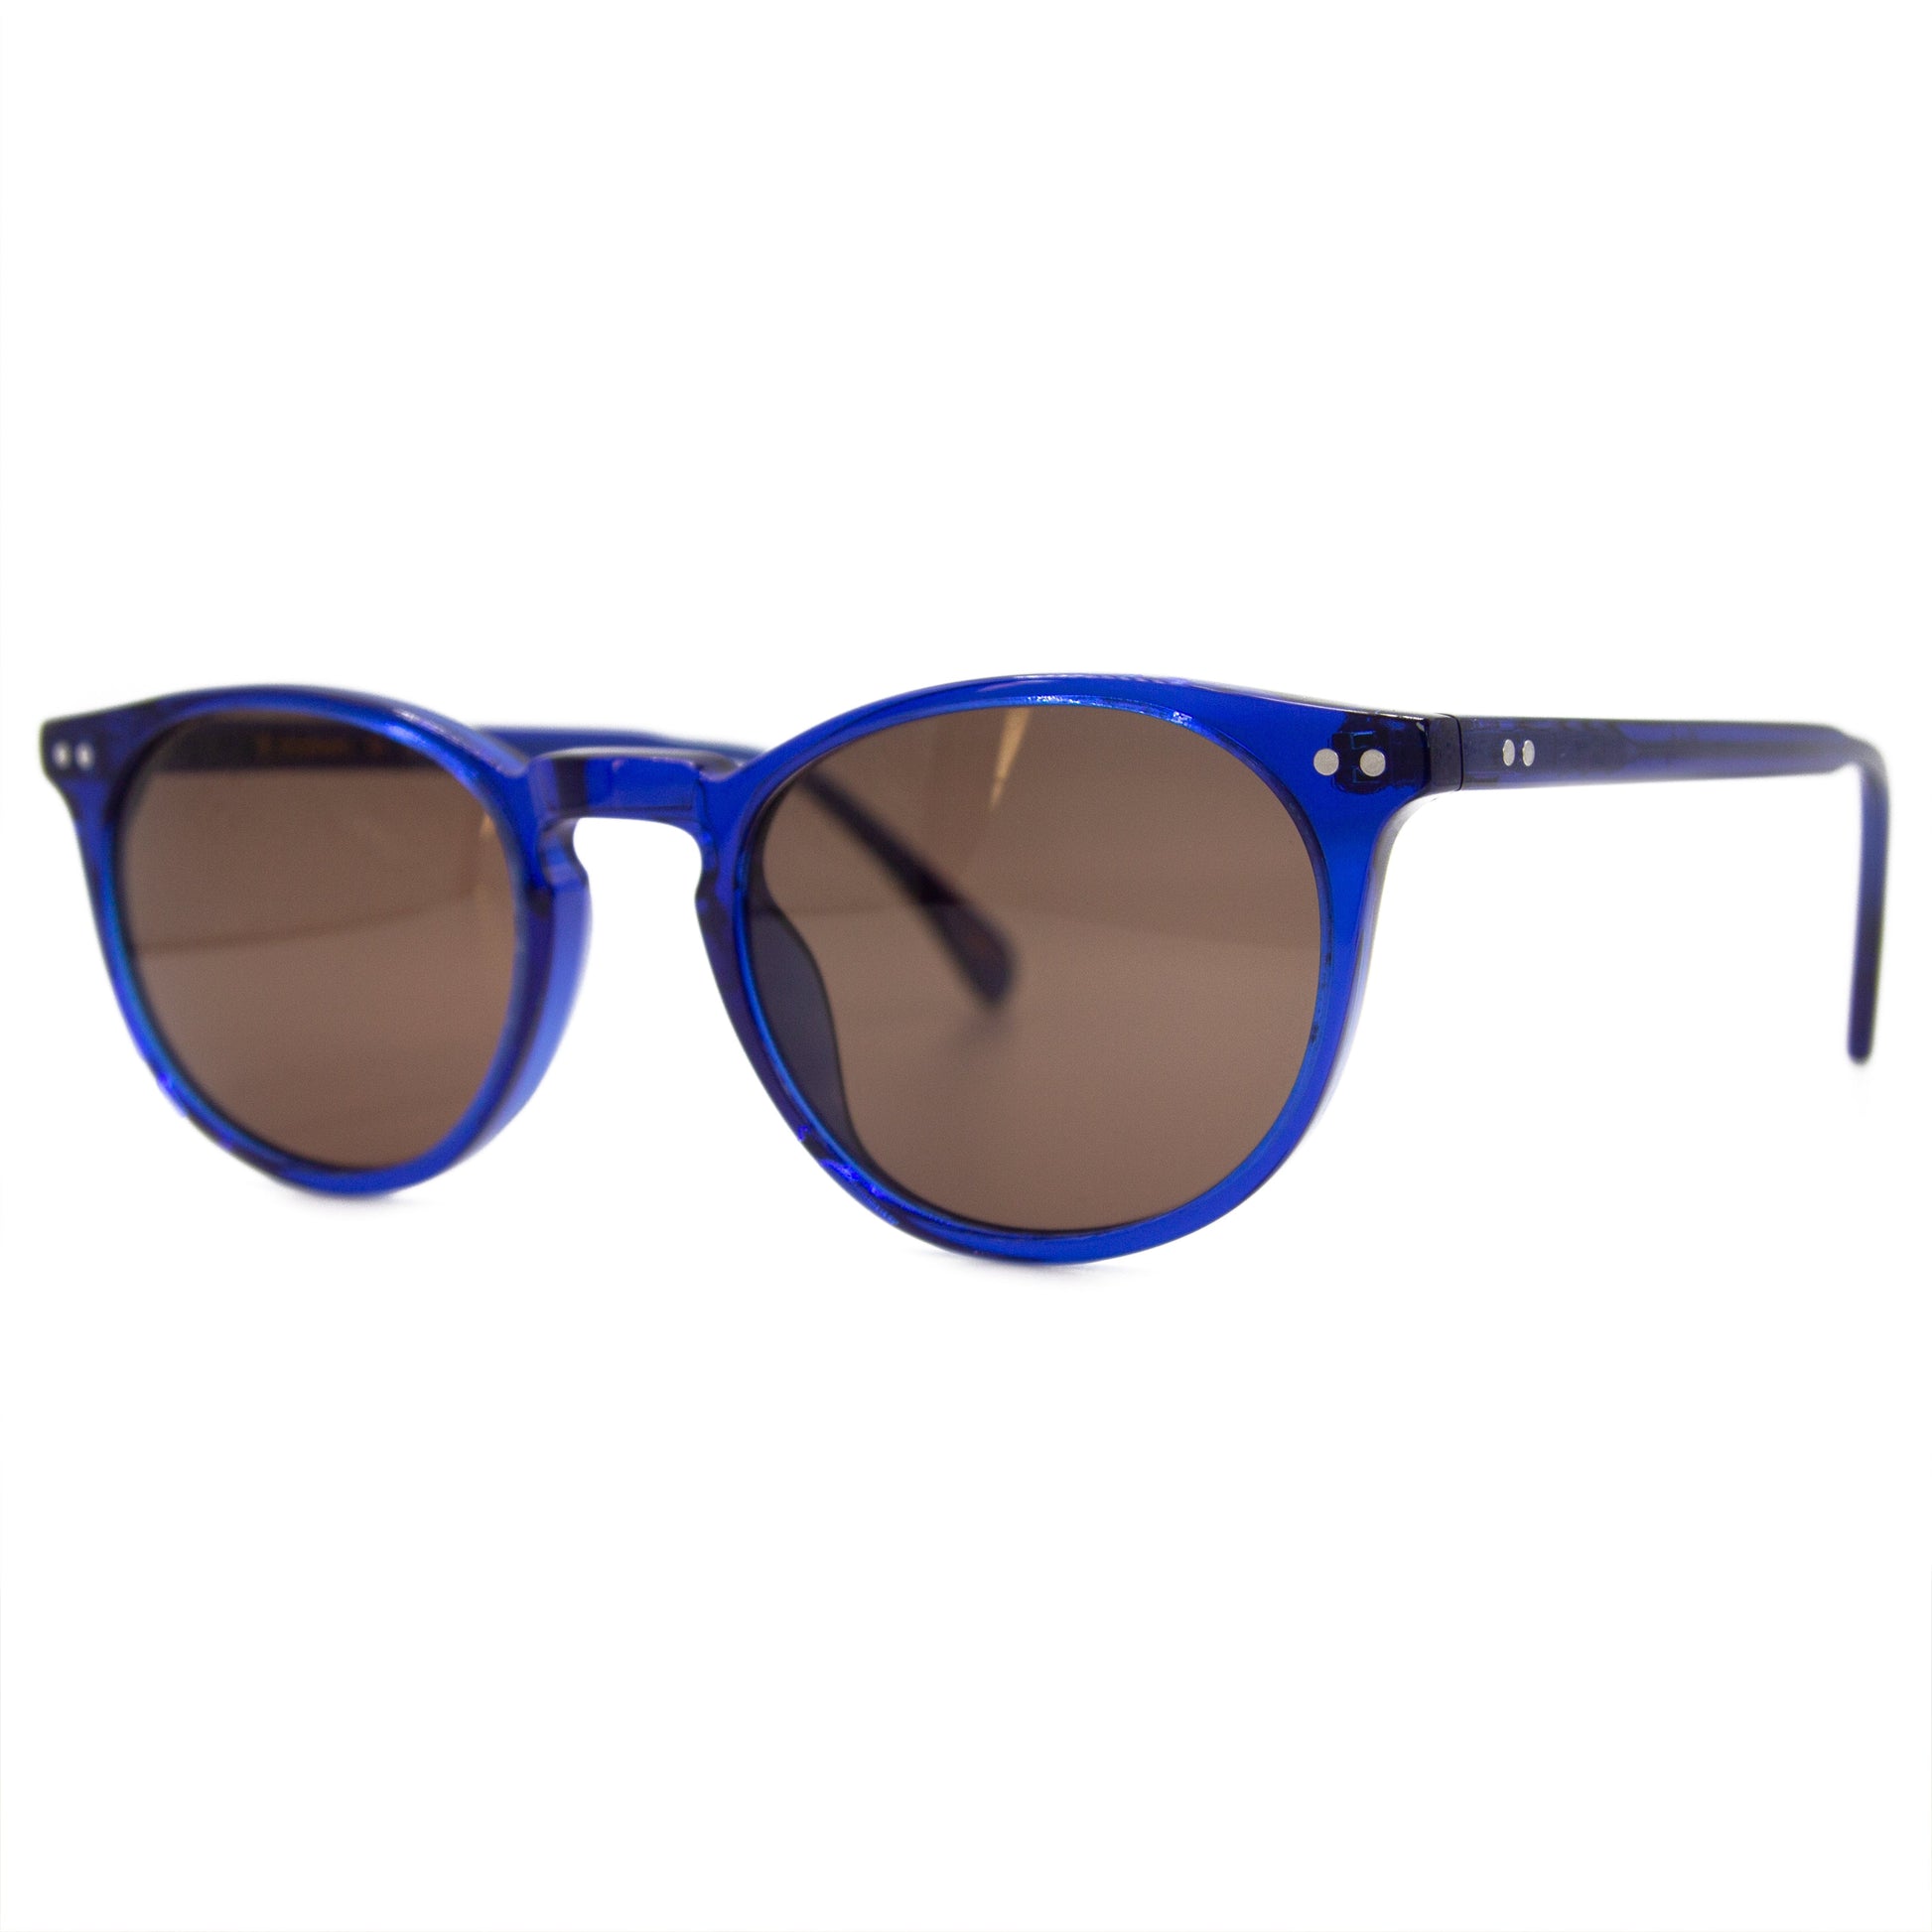 Small Round Blue Sunglasses